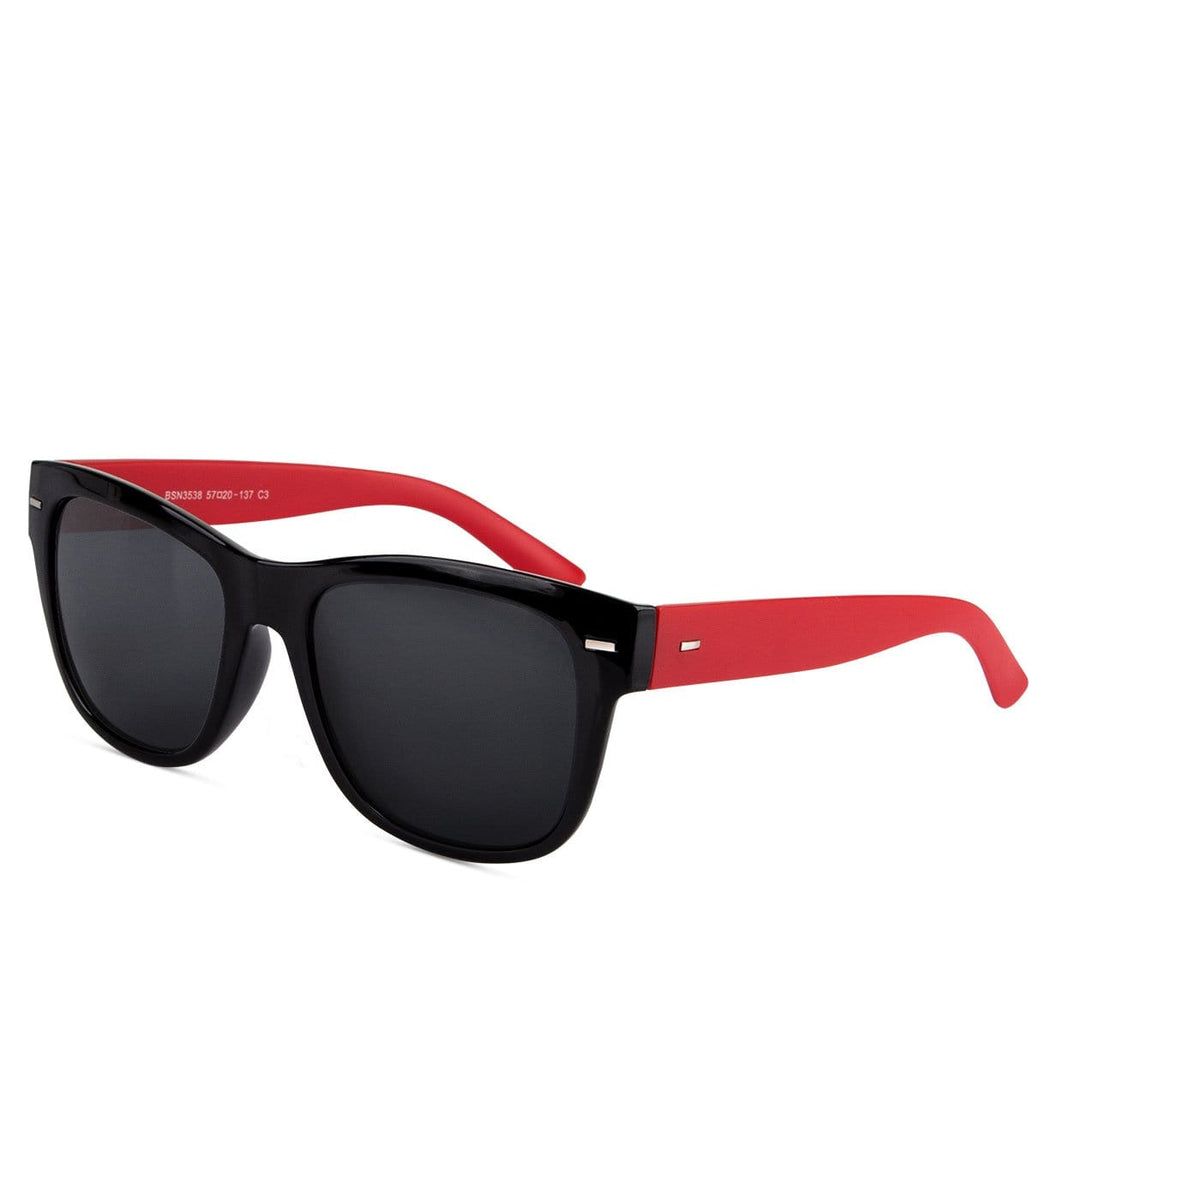 Makai Shinny Black- Red / Black Sunglasses